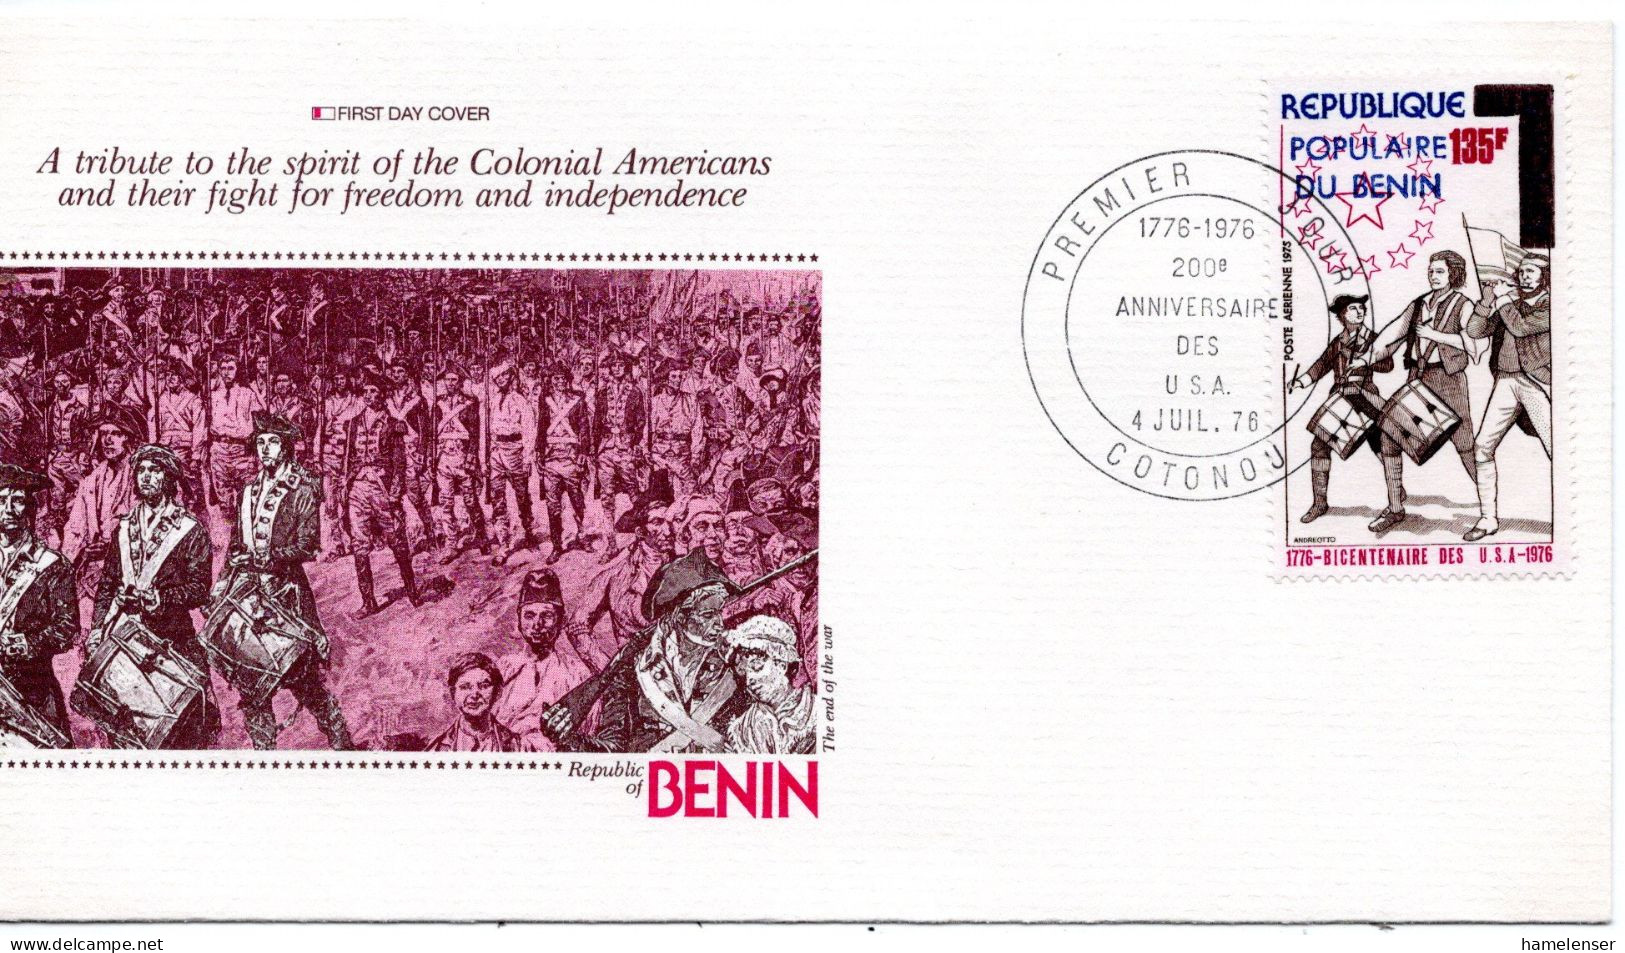 62658 - Benin - 1976 - 135F 200 Jahre USA A FDC COTONOU - Us Independence